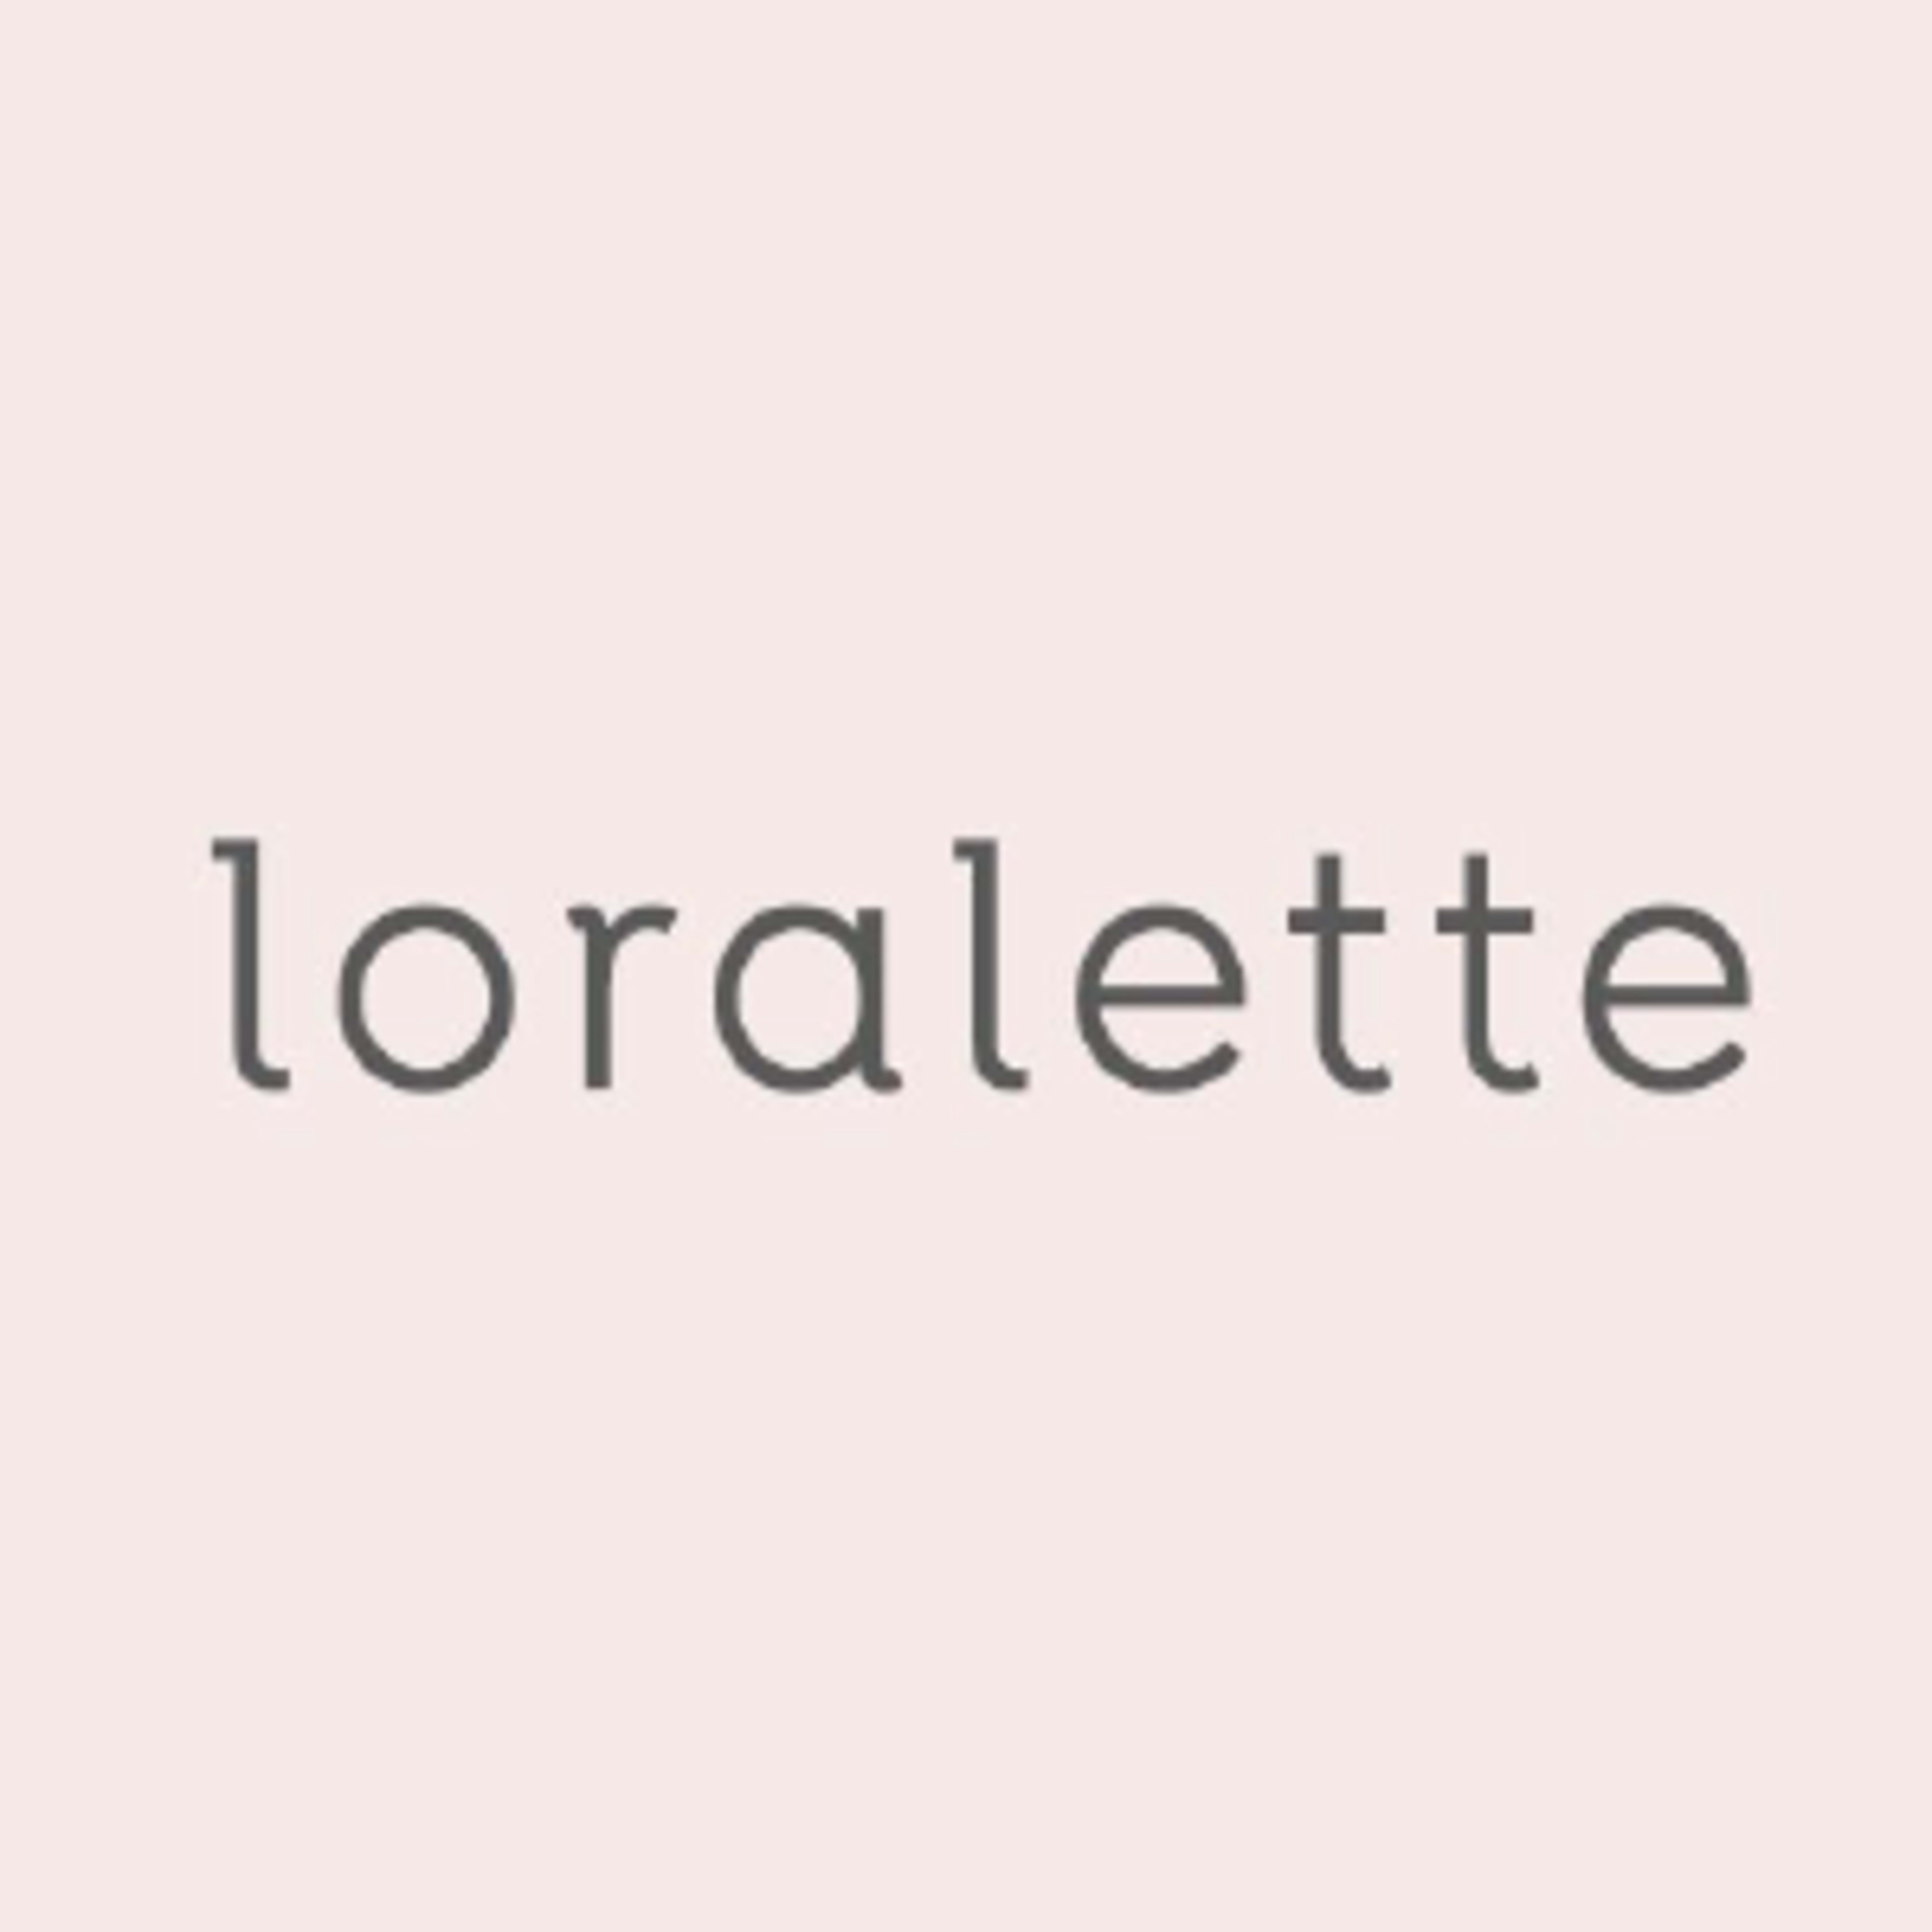 LoraletteCode